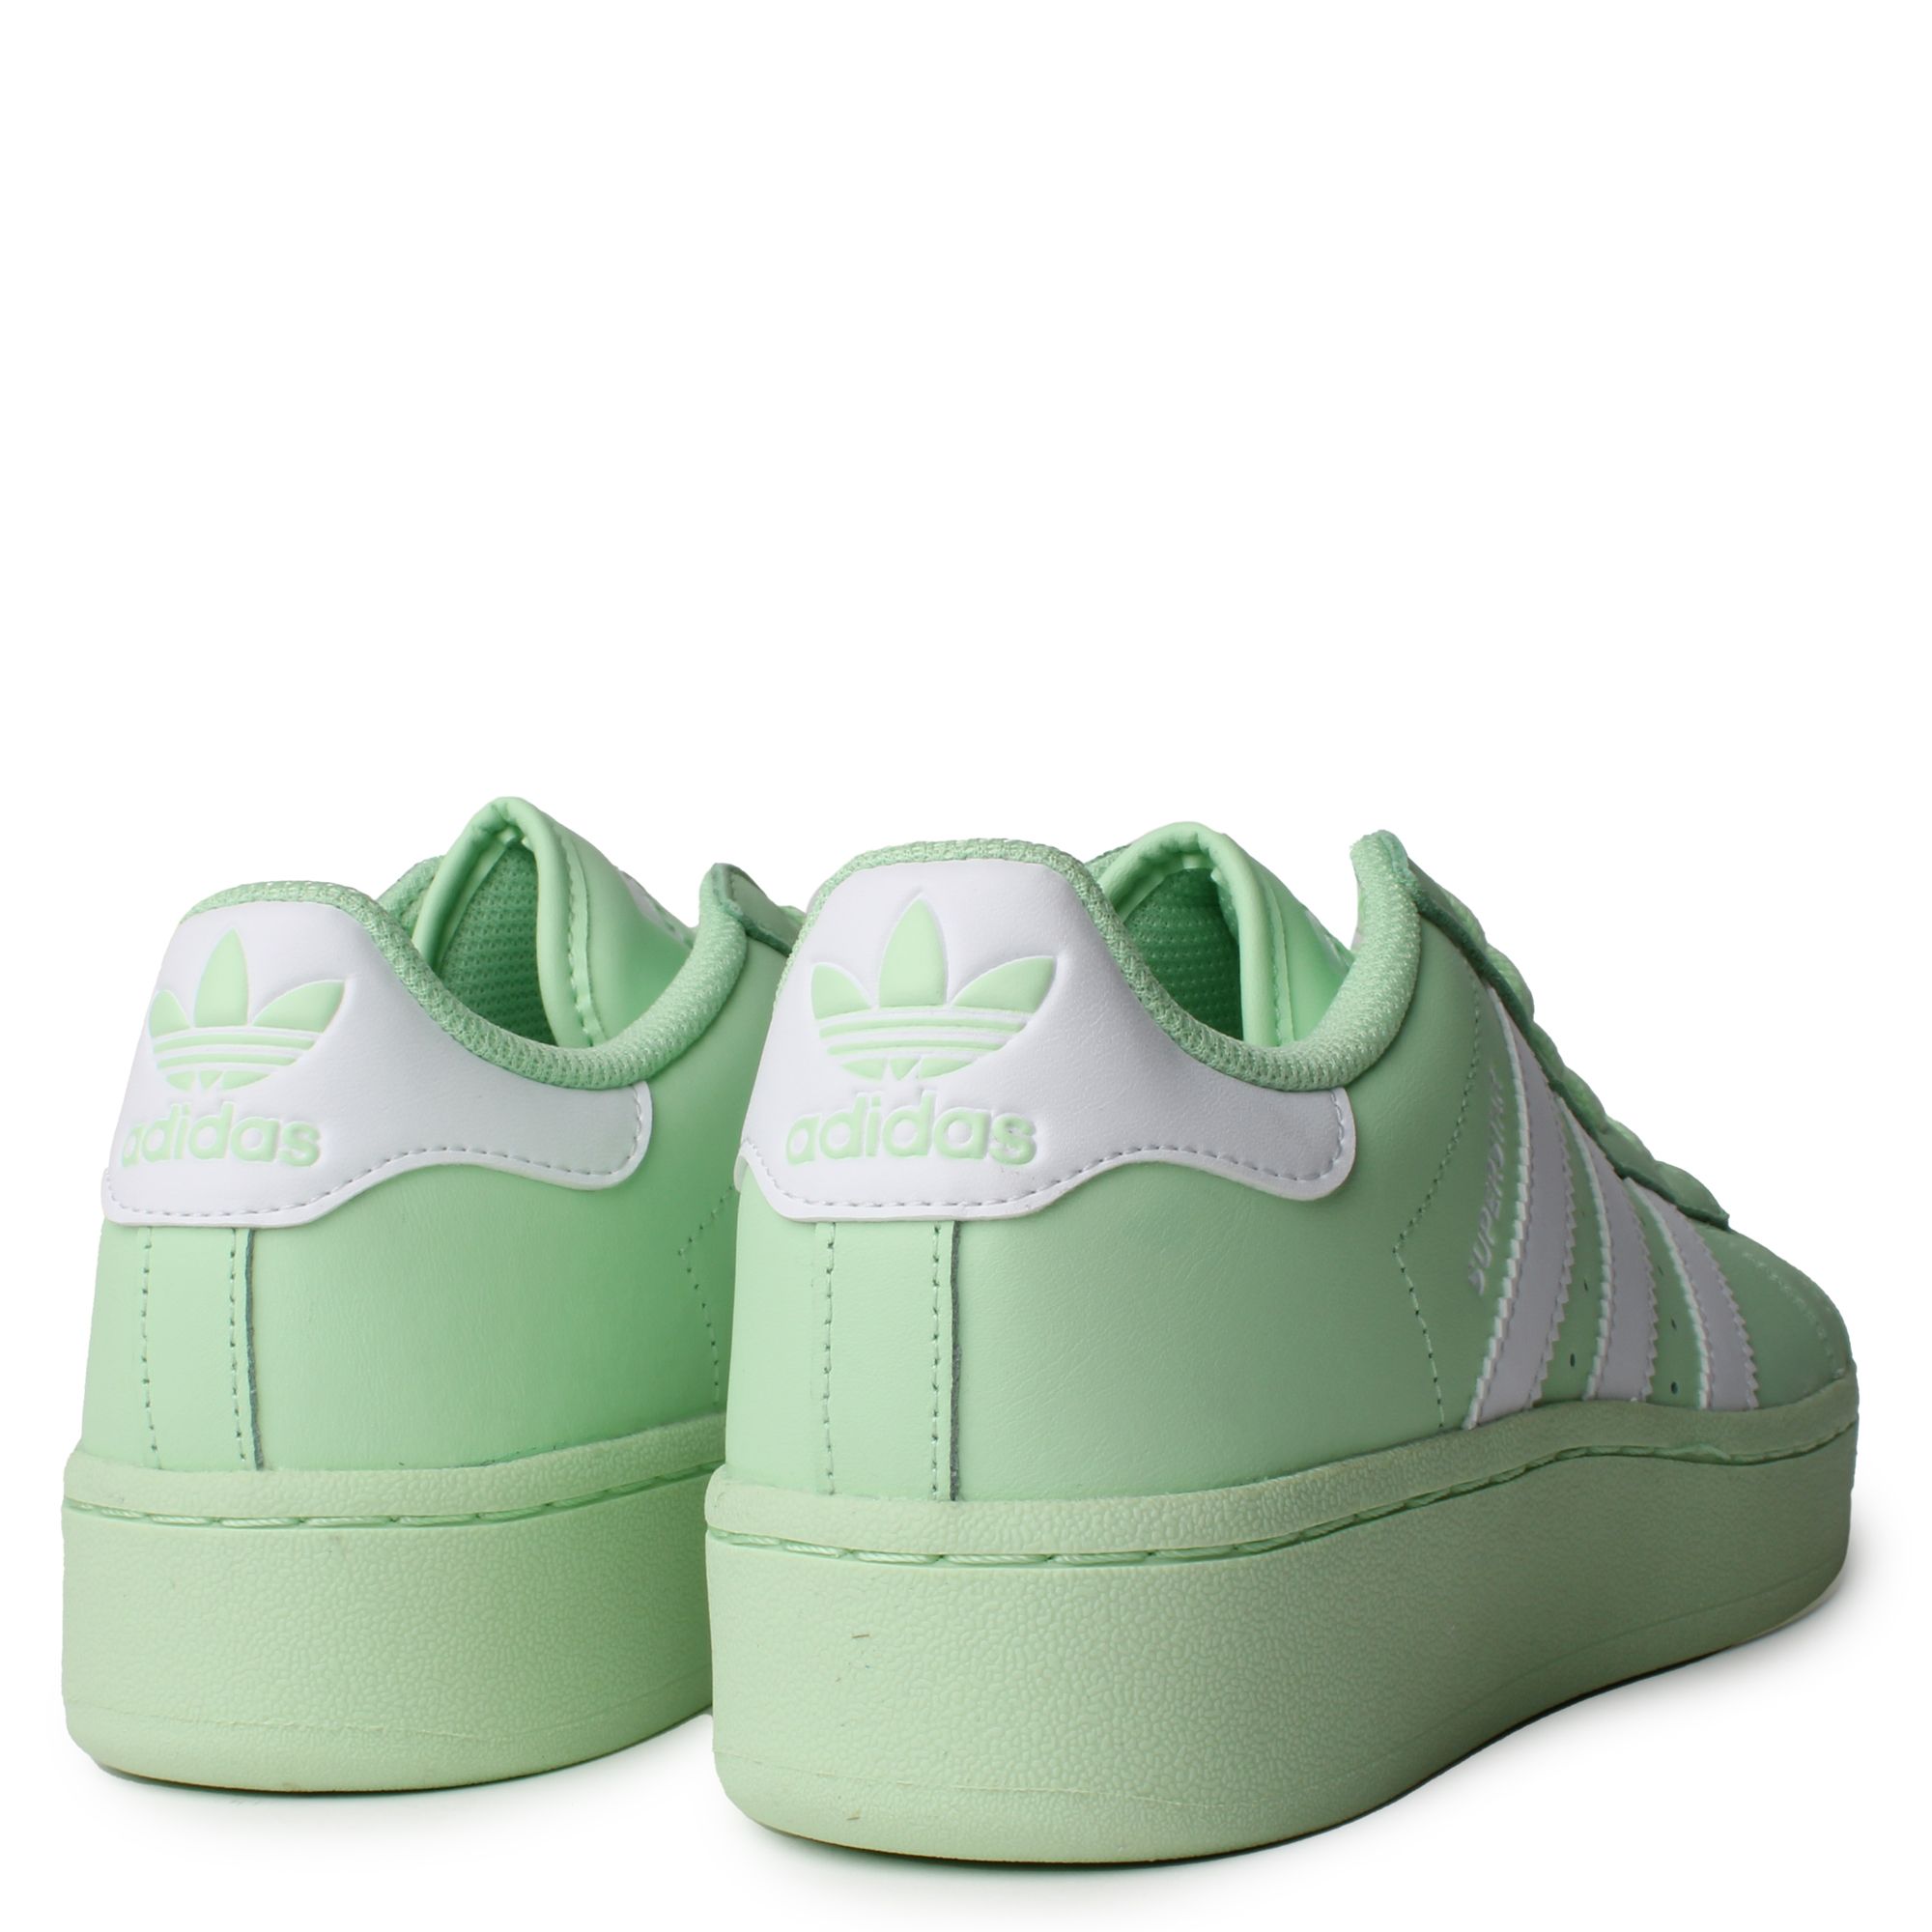 adidas superstar light green